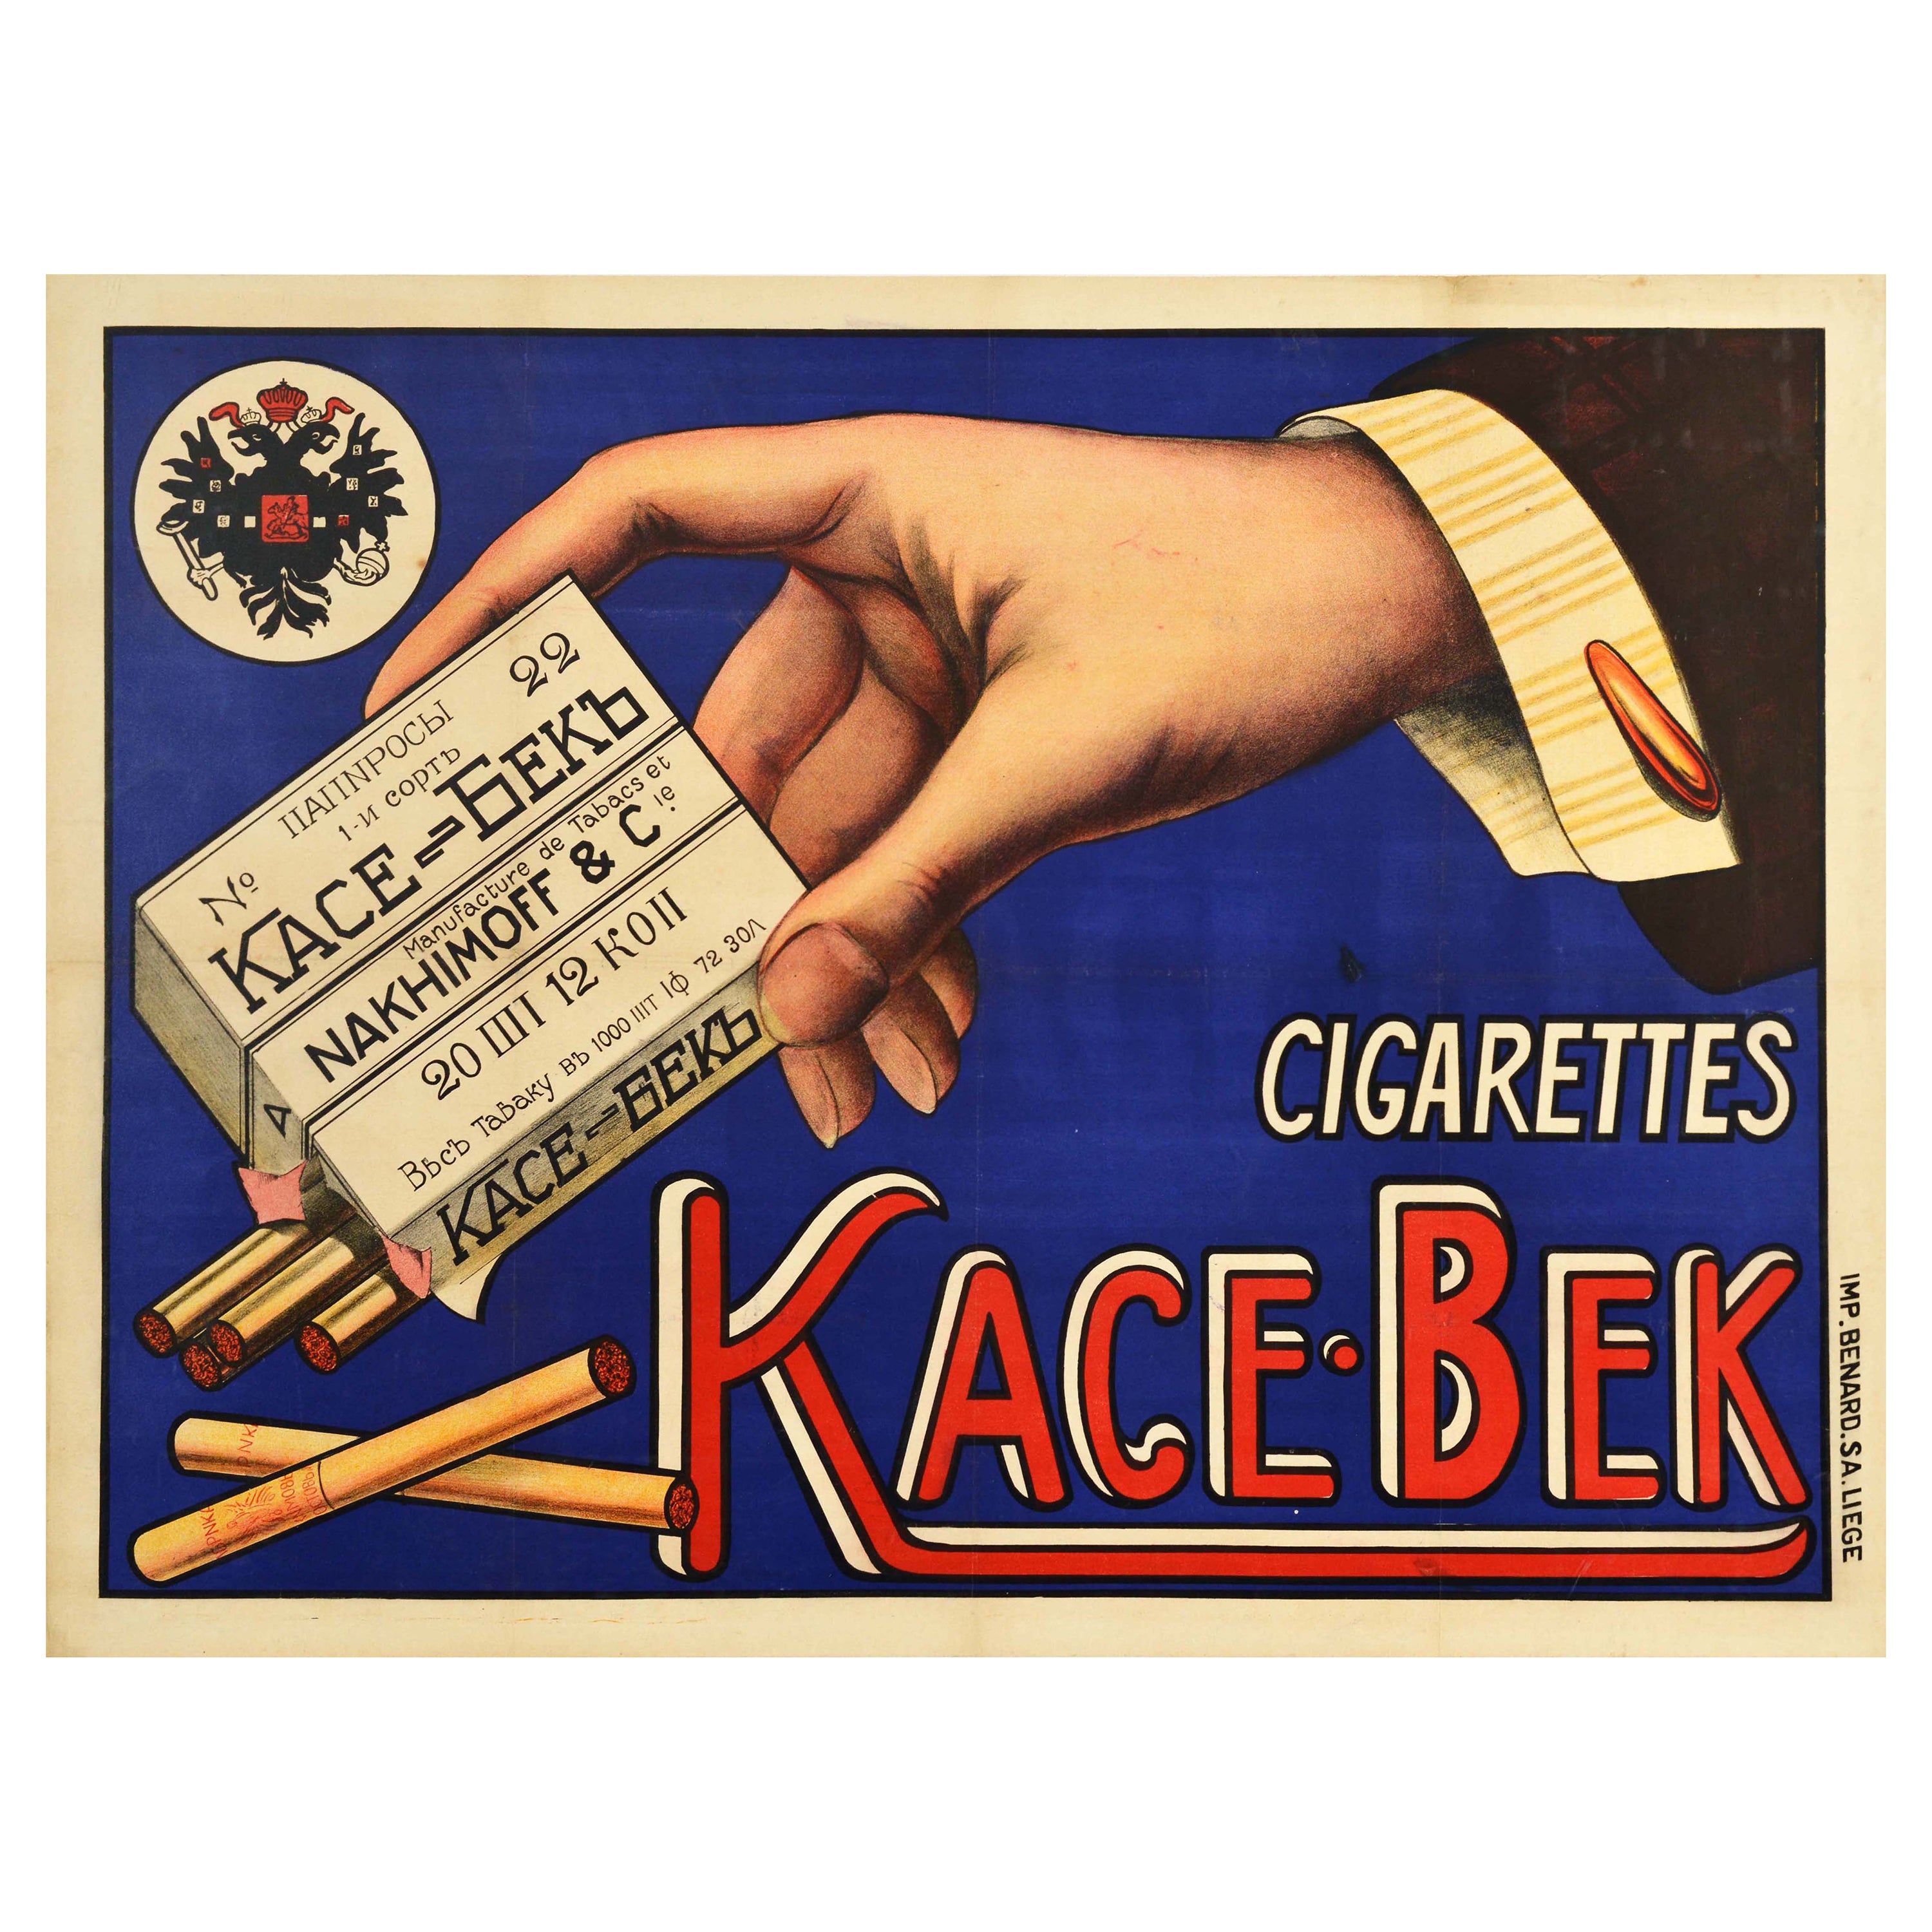 Original Antique Advertising Poster KaceBek Cigarettes Tobacco Imperial Russia For Sale